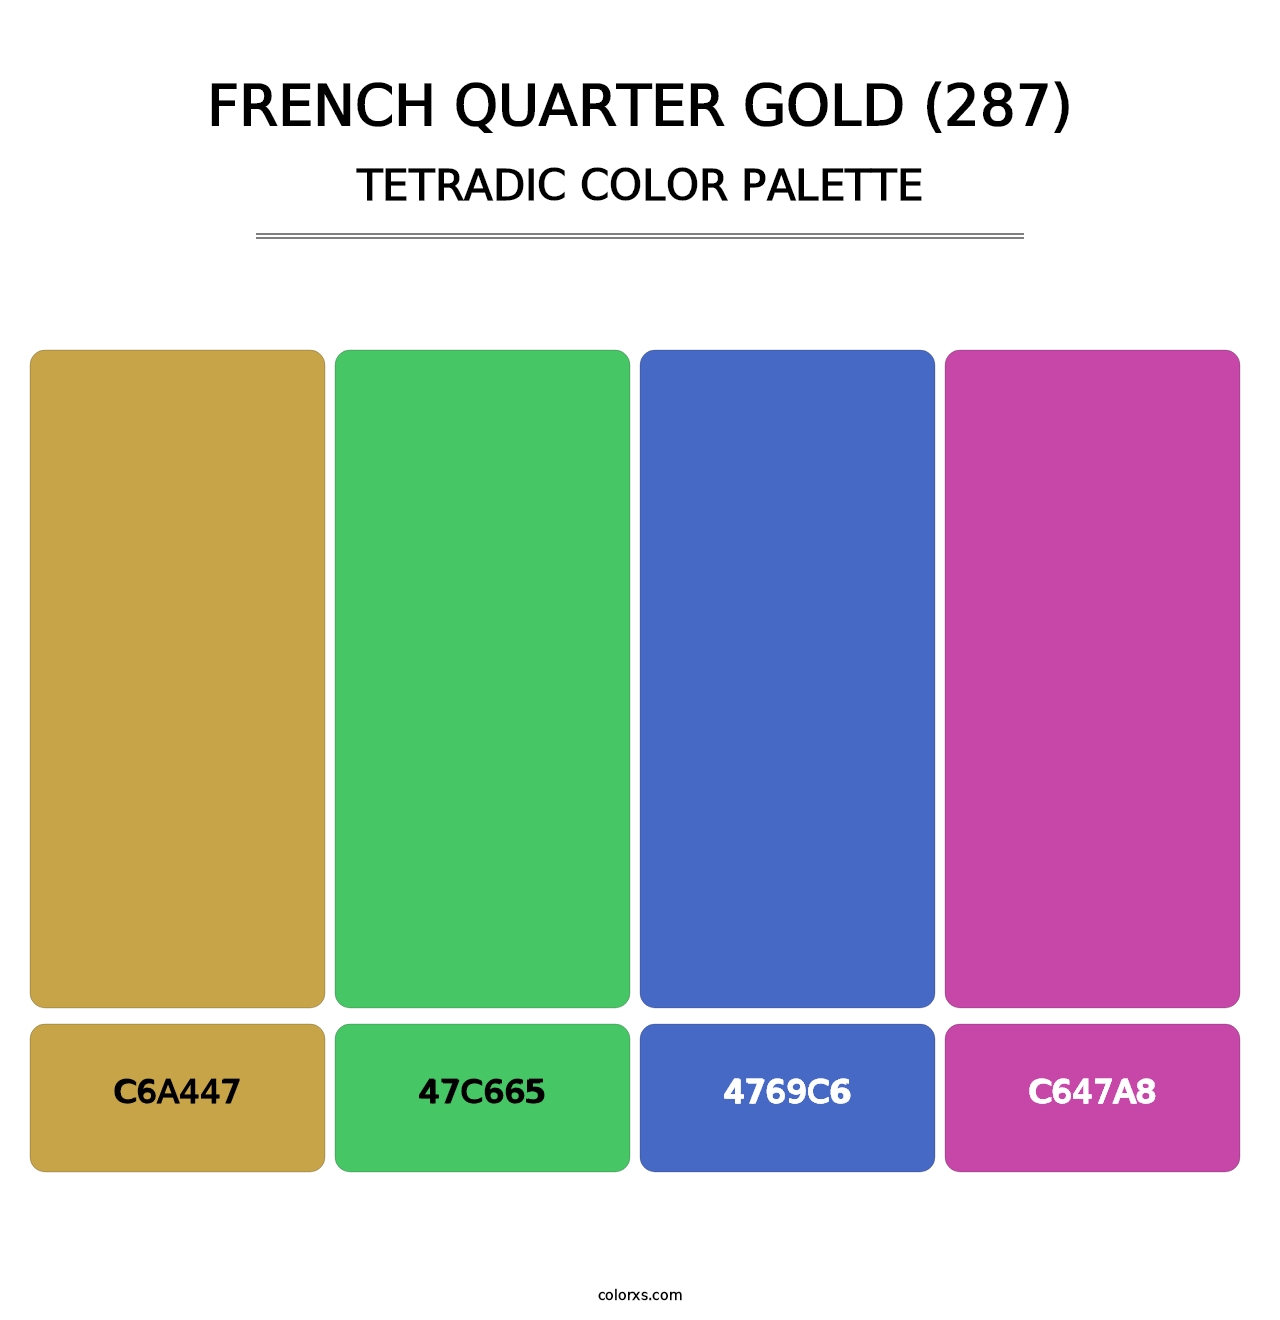 French Quarter Gold (287) - Tetradic Color Palette